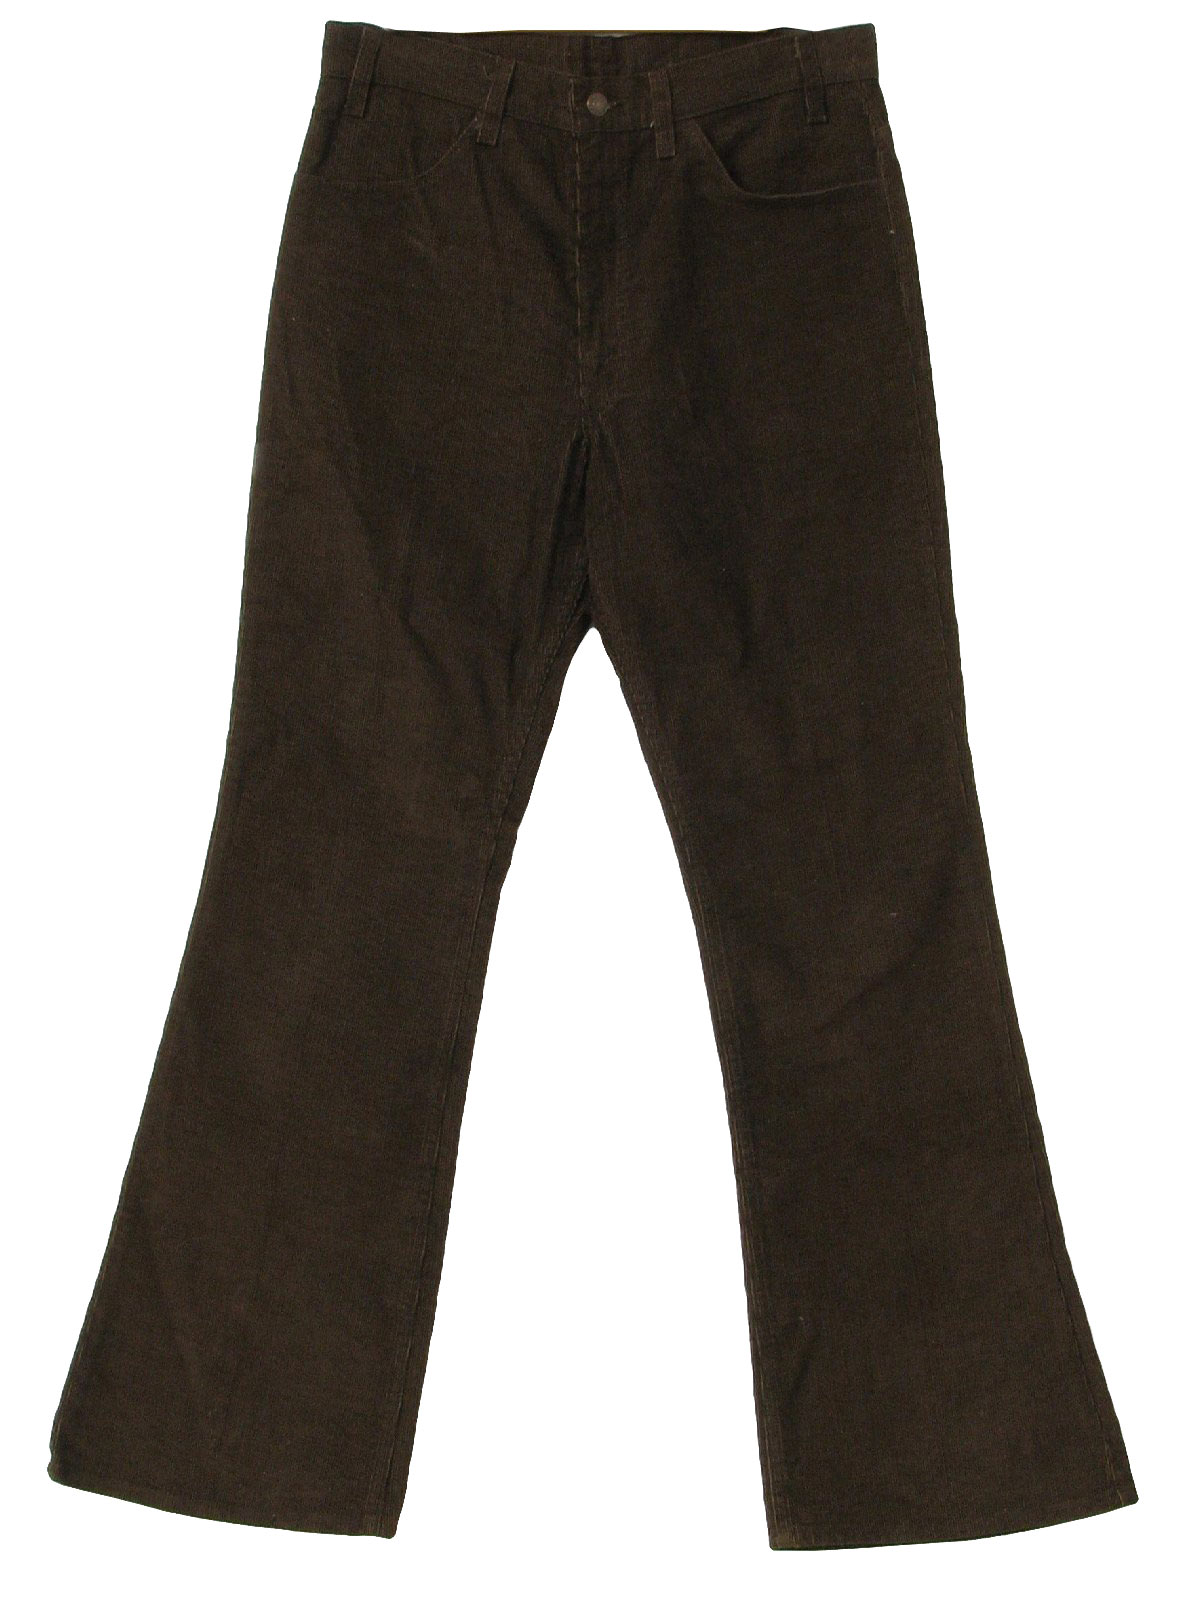 Retro Seventies Bellbottom Pants: 70s -Levis- Mens brown cotton pinwale ...